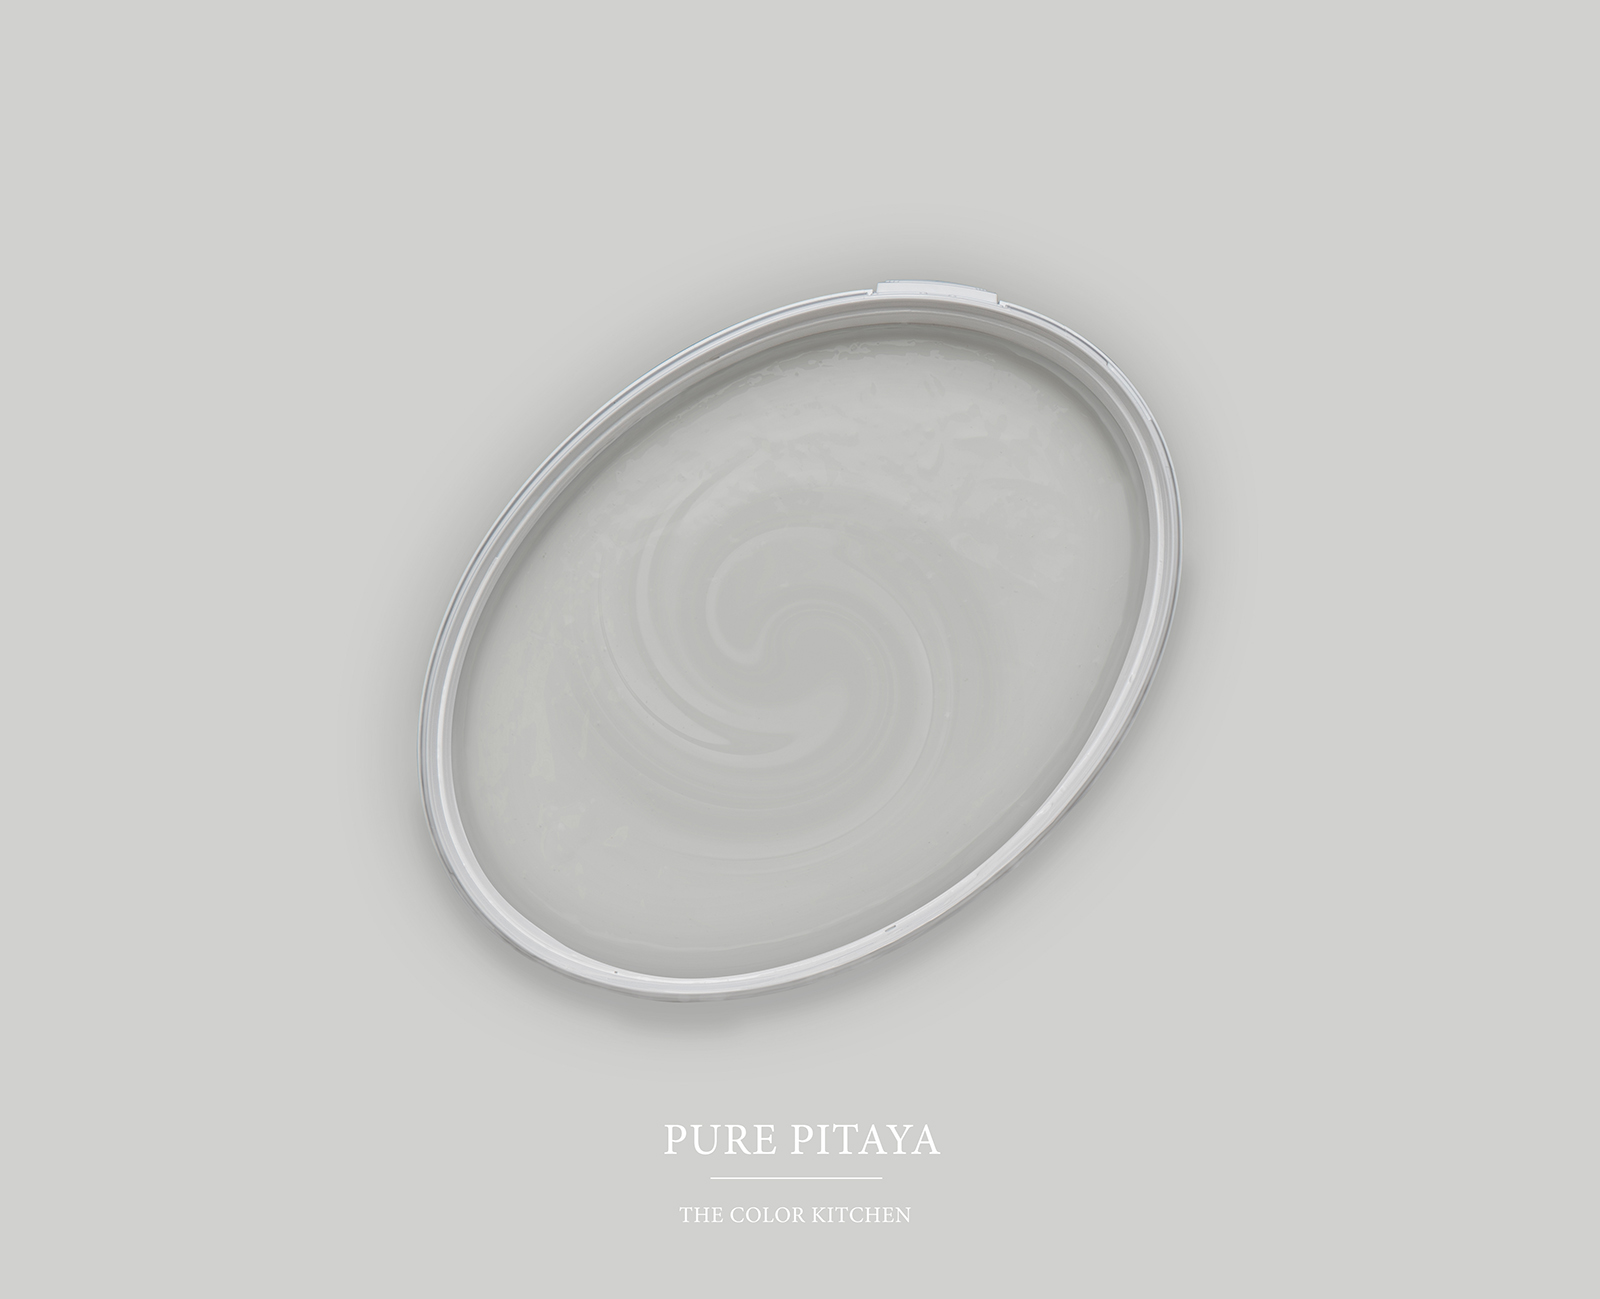         Wall Paint TCK1003 »Pure Pitaya« in bluish grey – 2.5 litre
    